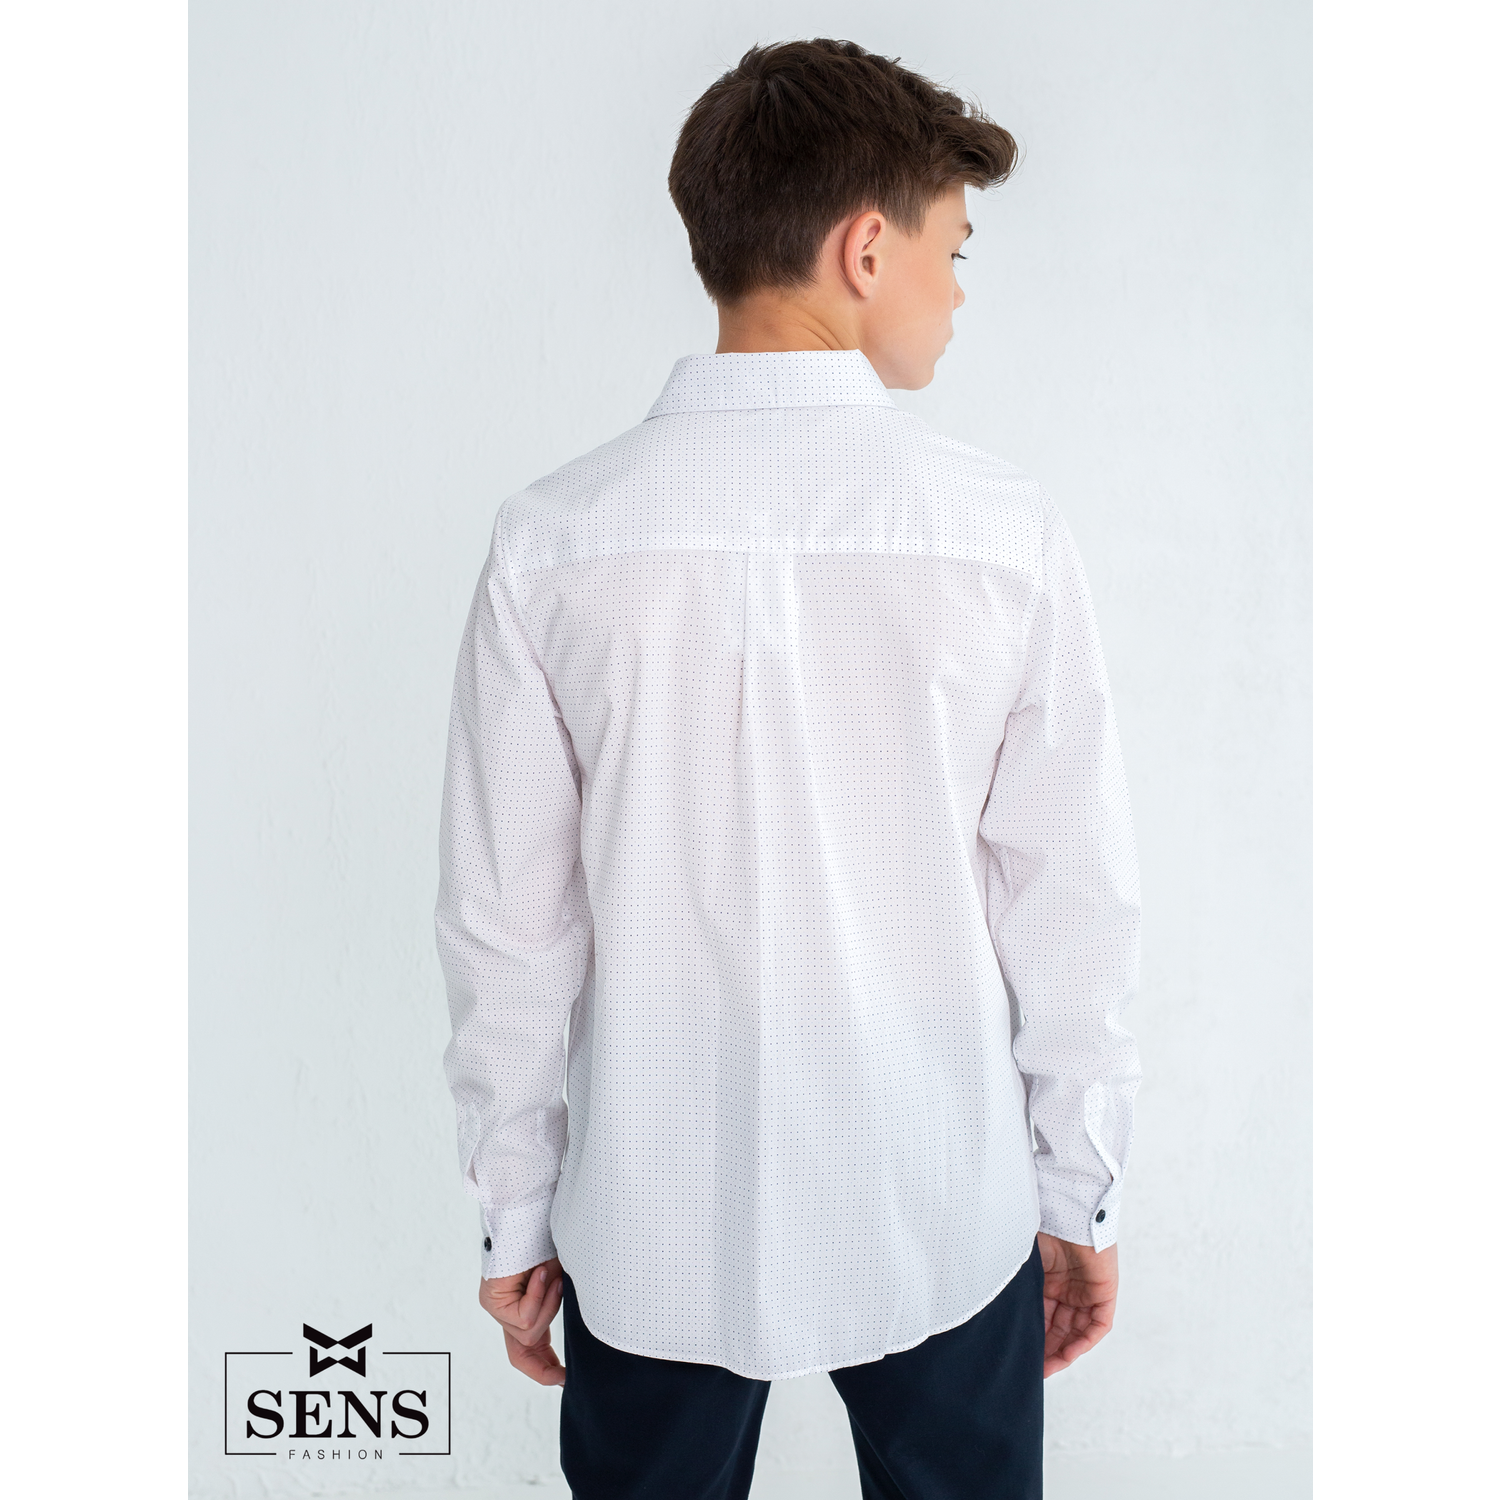 Рубашка Sens Fashion РМПП/белый - фото 2